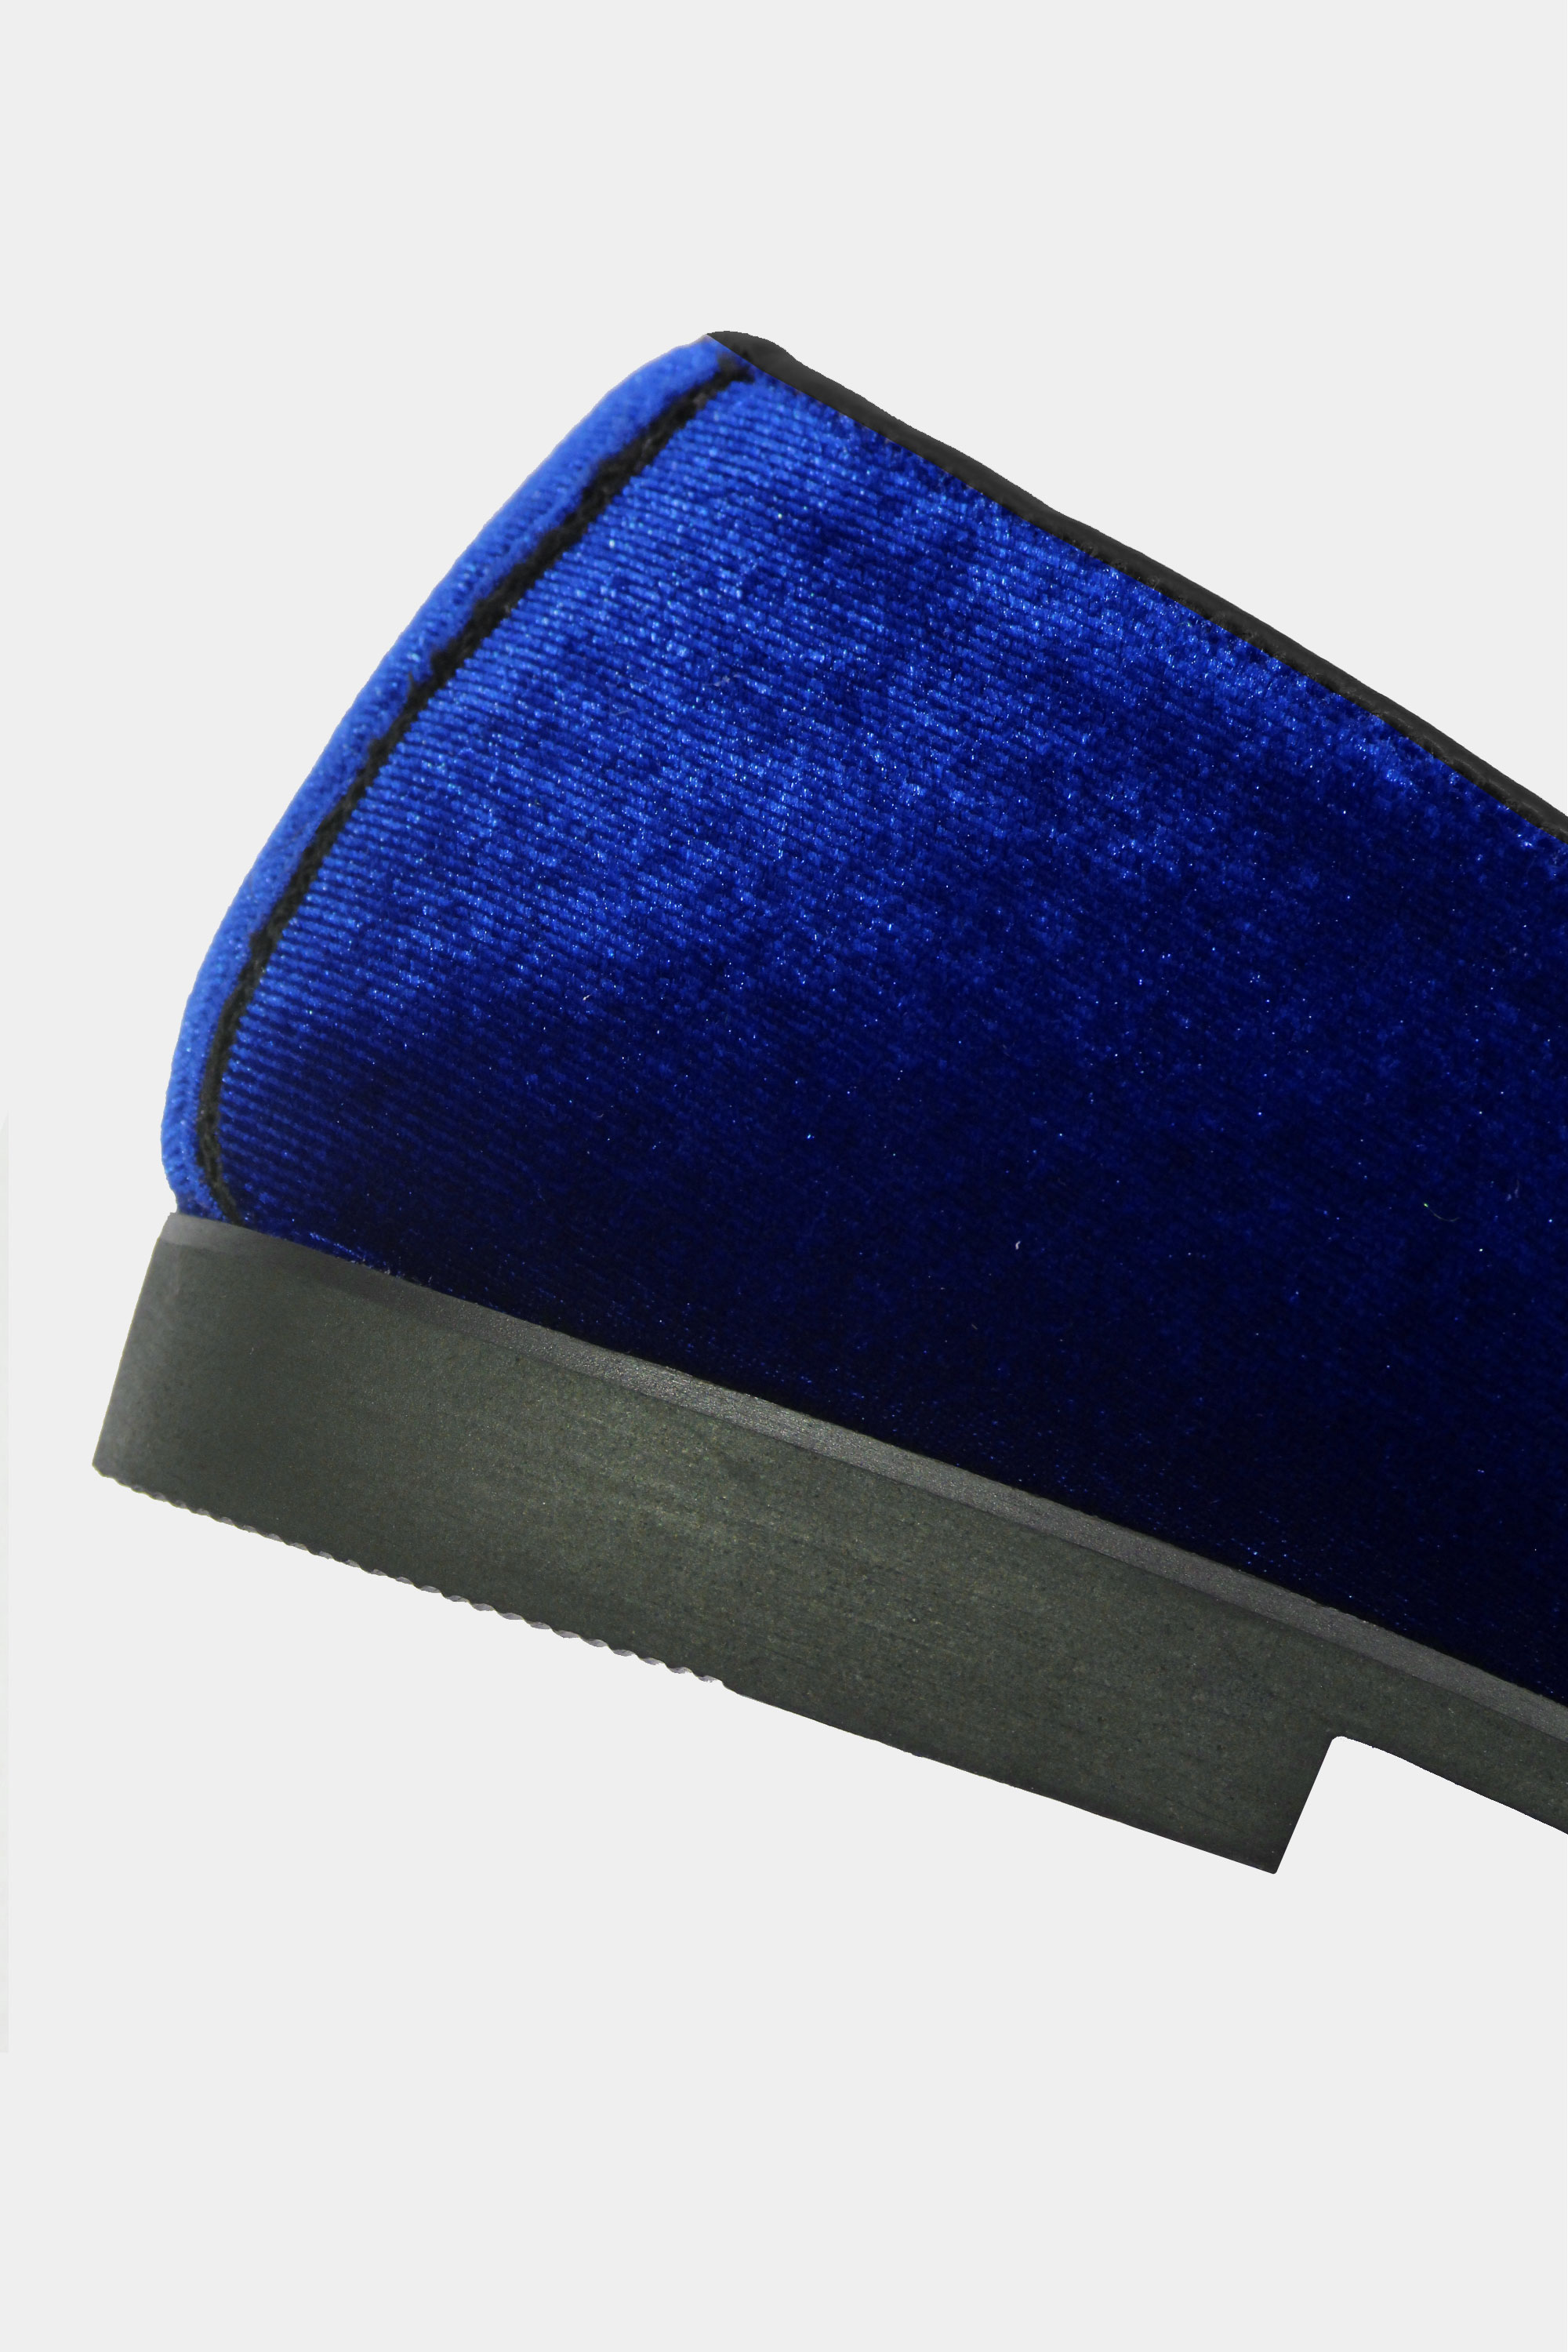 Blue-Prom-Loafers-Shoes-from-Gentlemansguru.com